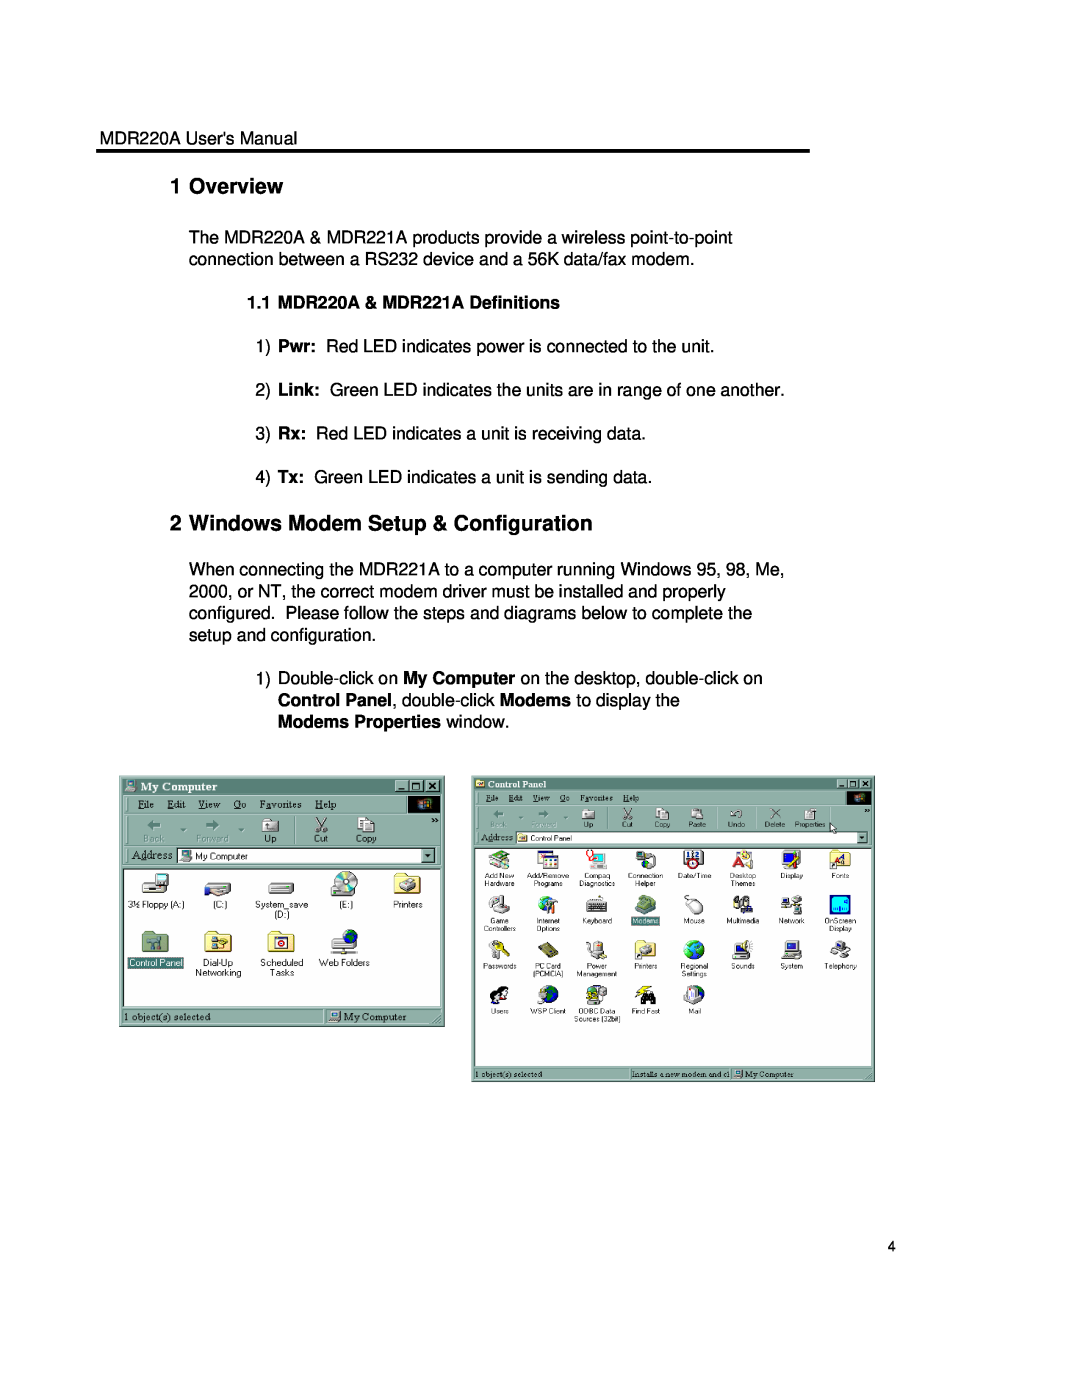 Black Box user manual Overview, Windows Modem Setup & Configuration, 1.1 MDR220A & MDR221A Definitions 